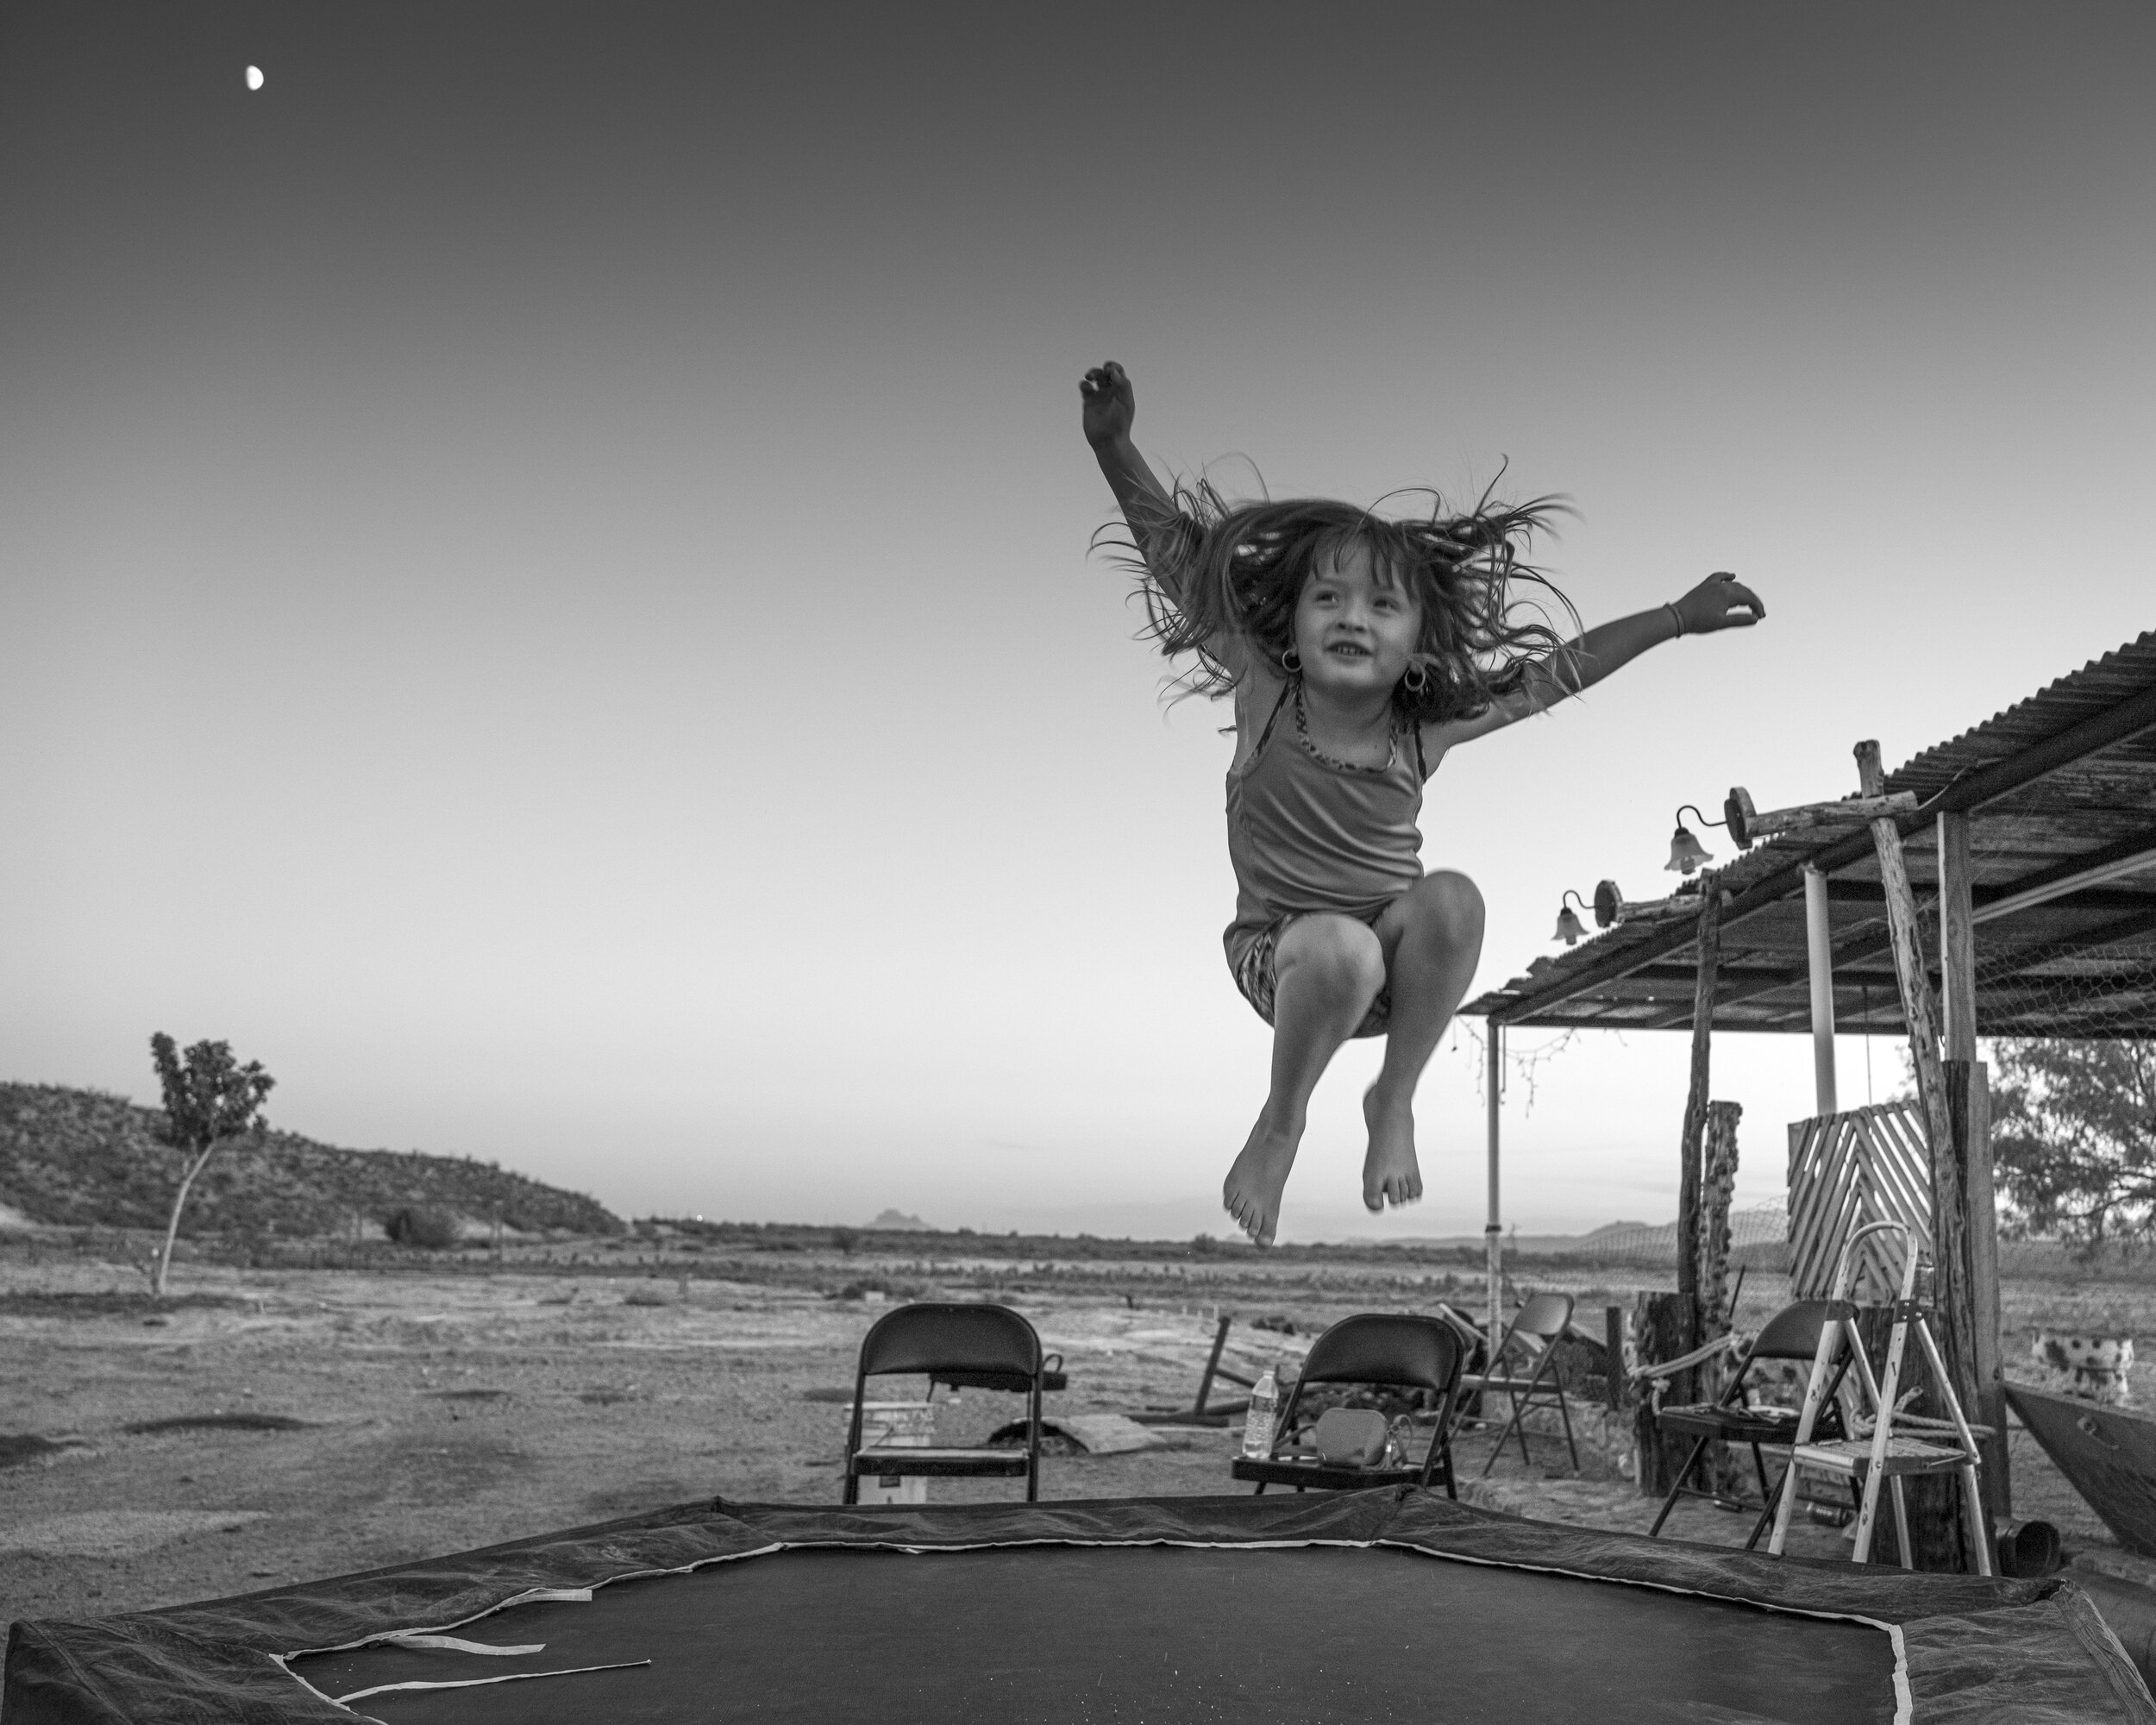  Girl jumping on trampoline Riudoso, Texas 2019    5:4  